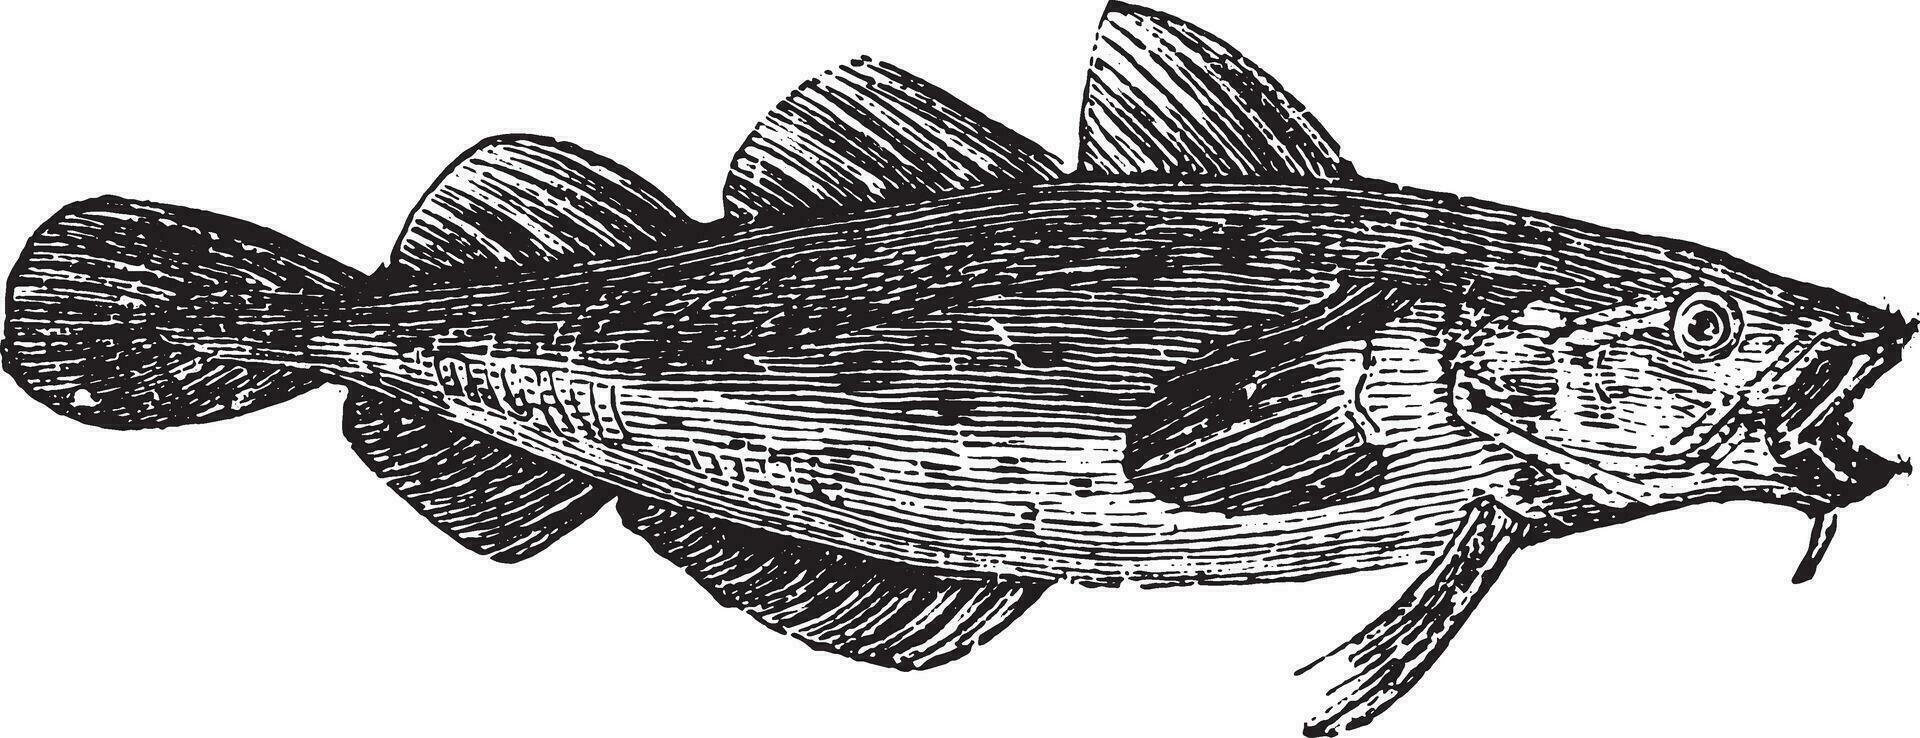 Cod fish or Gadus spp. vector